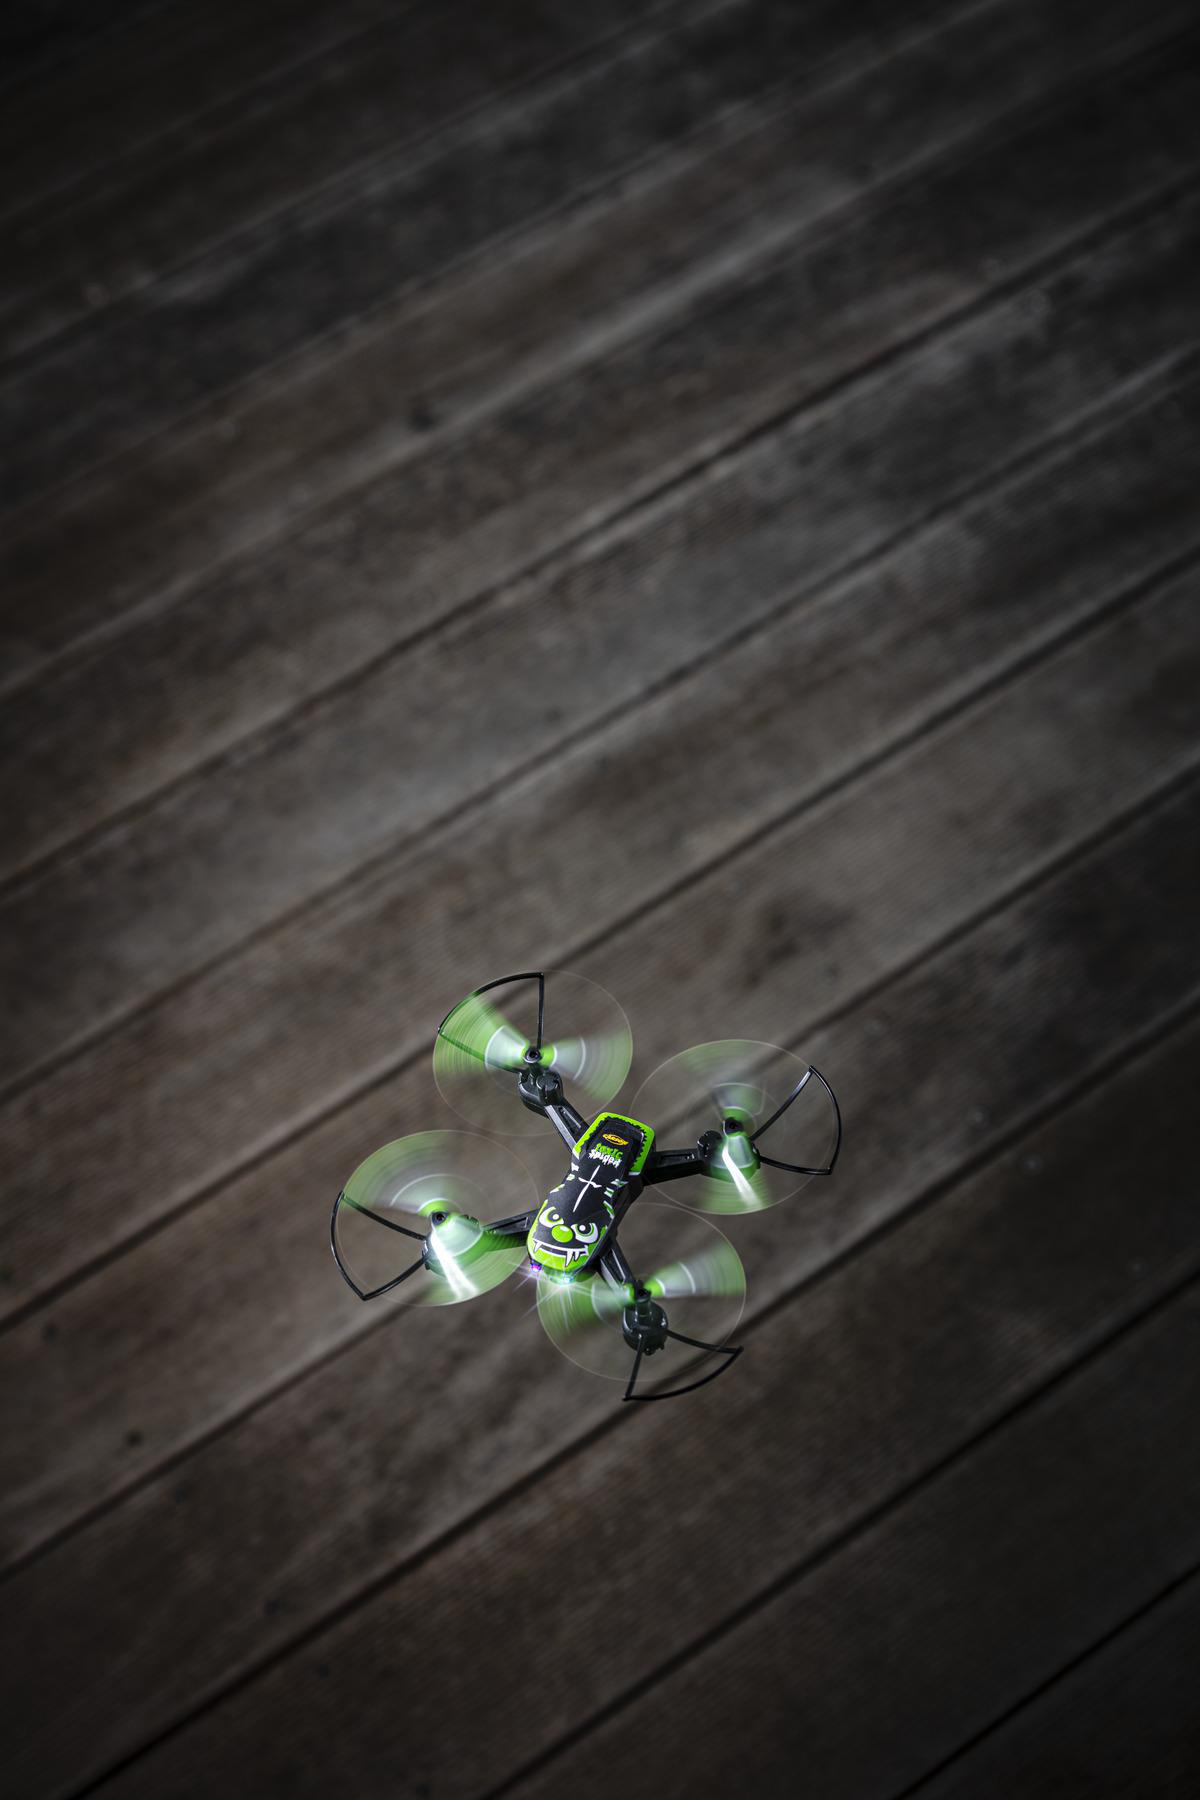 Drohne, Quadcopter RTF Spider ferngesteuerte Toxic CARSON 100% 2.0 Grün X4